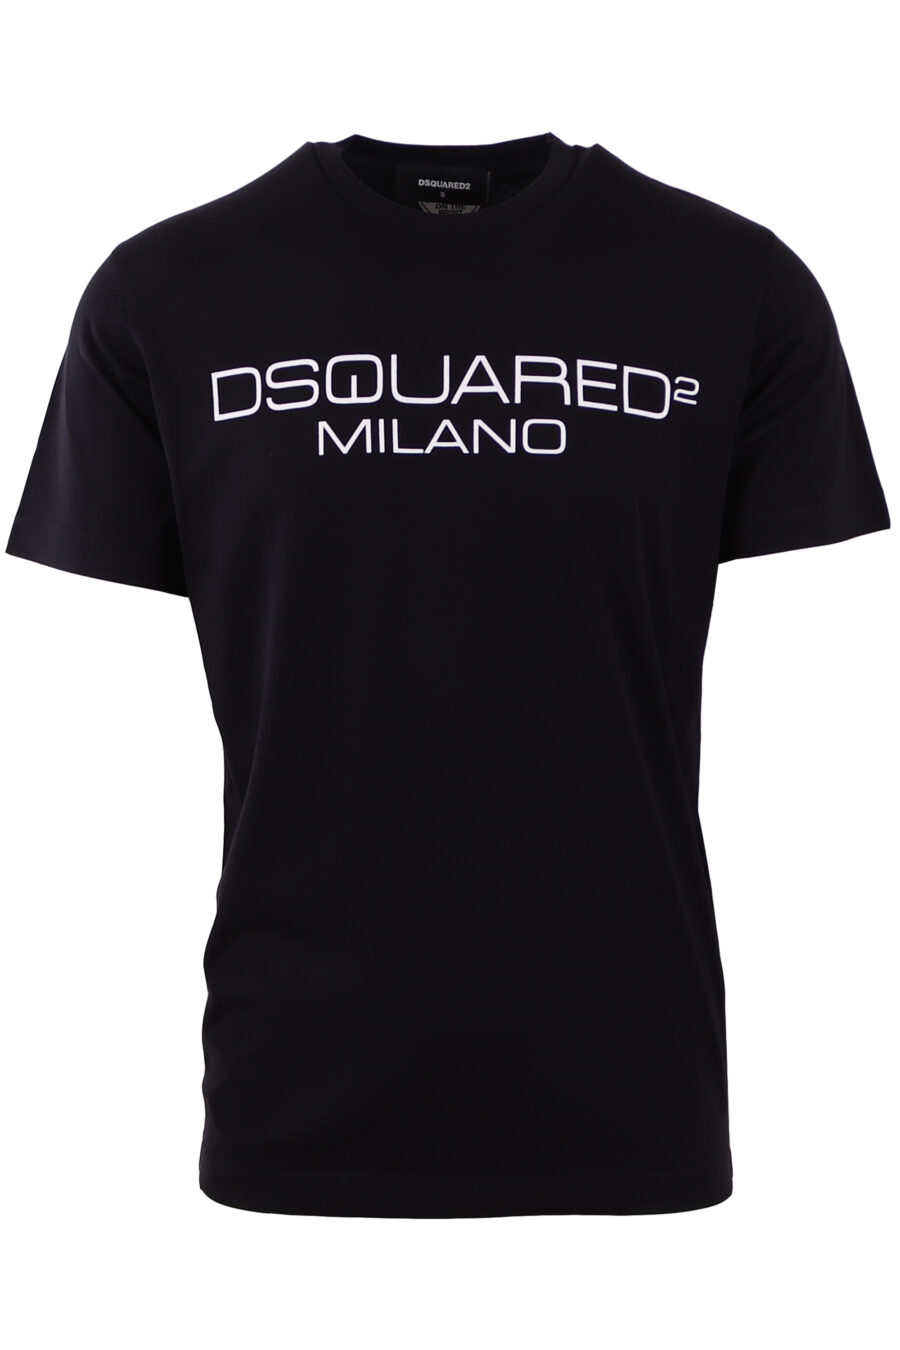 T-shirt preta com maxilogo "milano" - IMG 3580